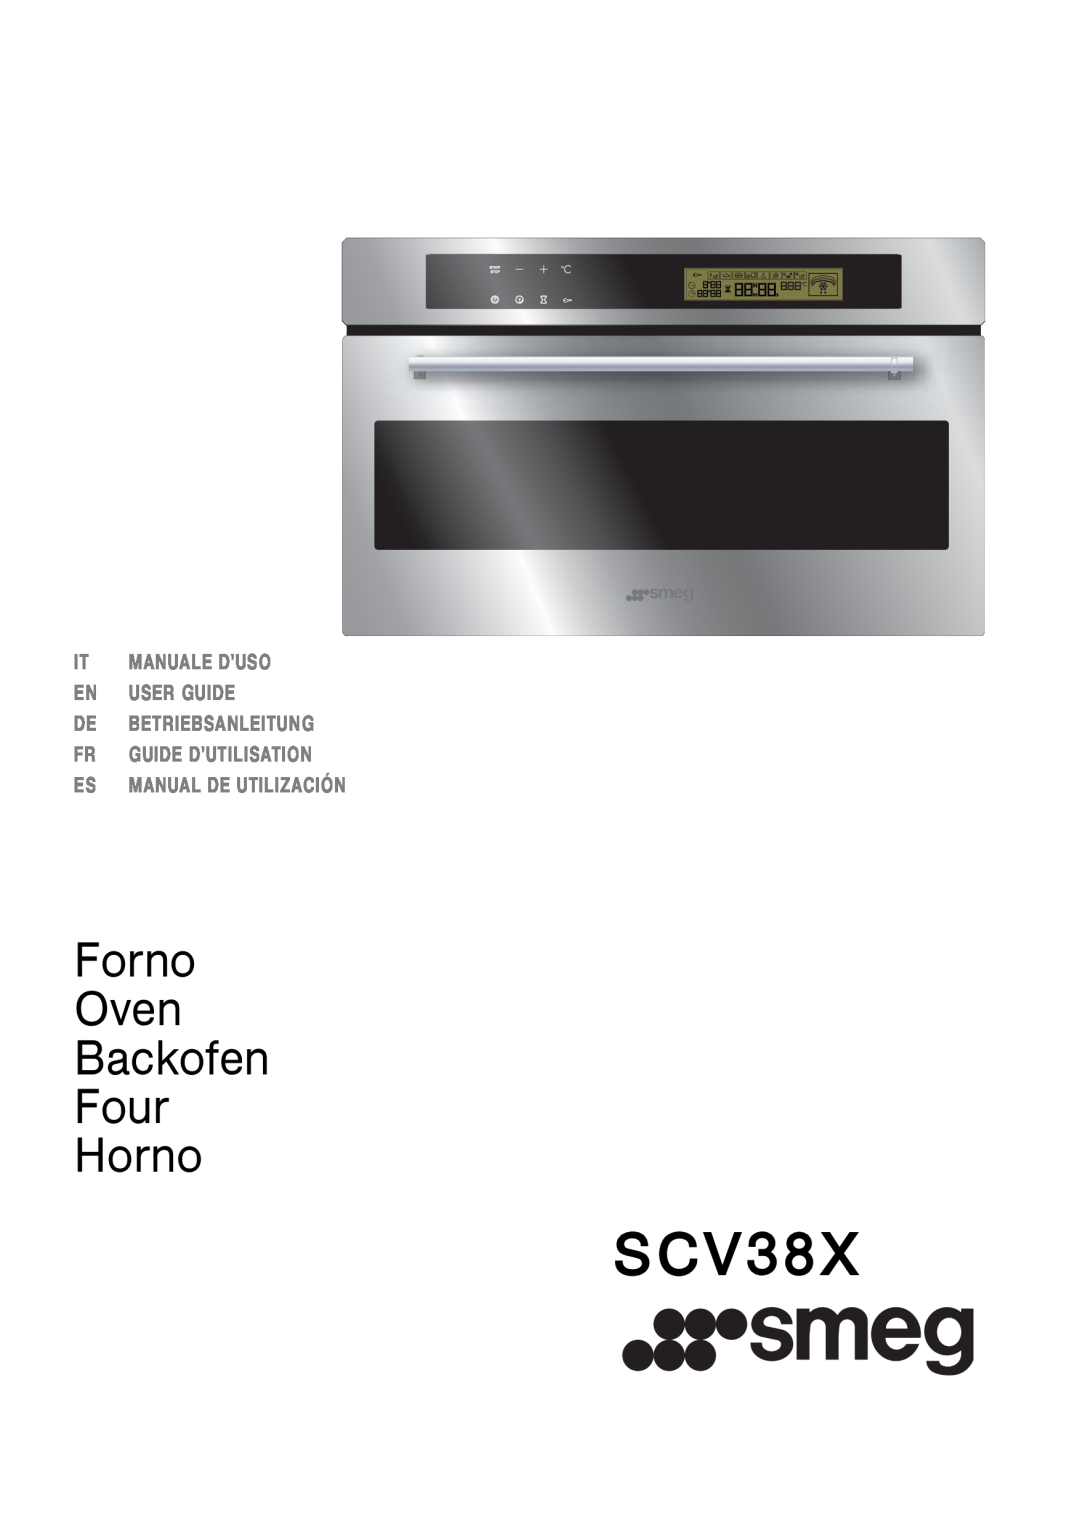 Smeg SCV38X manual S C V, Forno Oven Backofen Four Horno, Manuale Duso, User Guide, Betriebsanleitung, Guide Dutilisation 